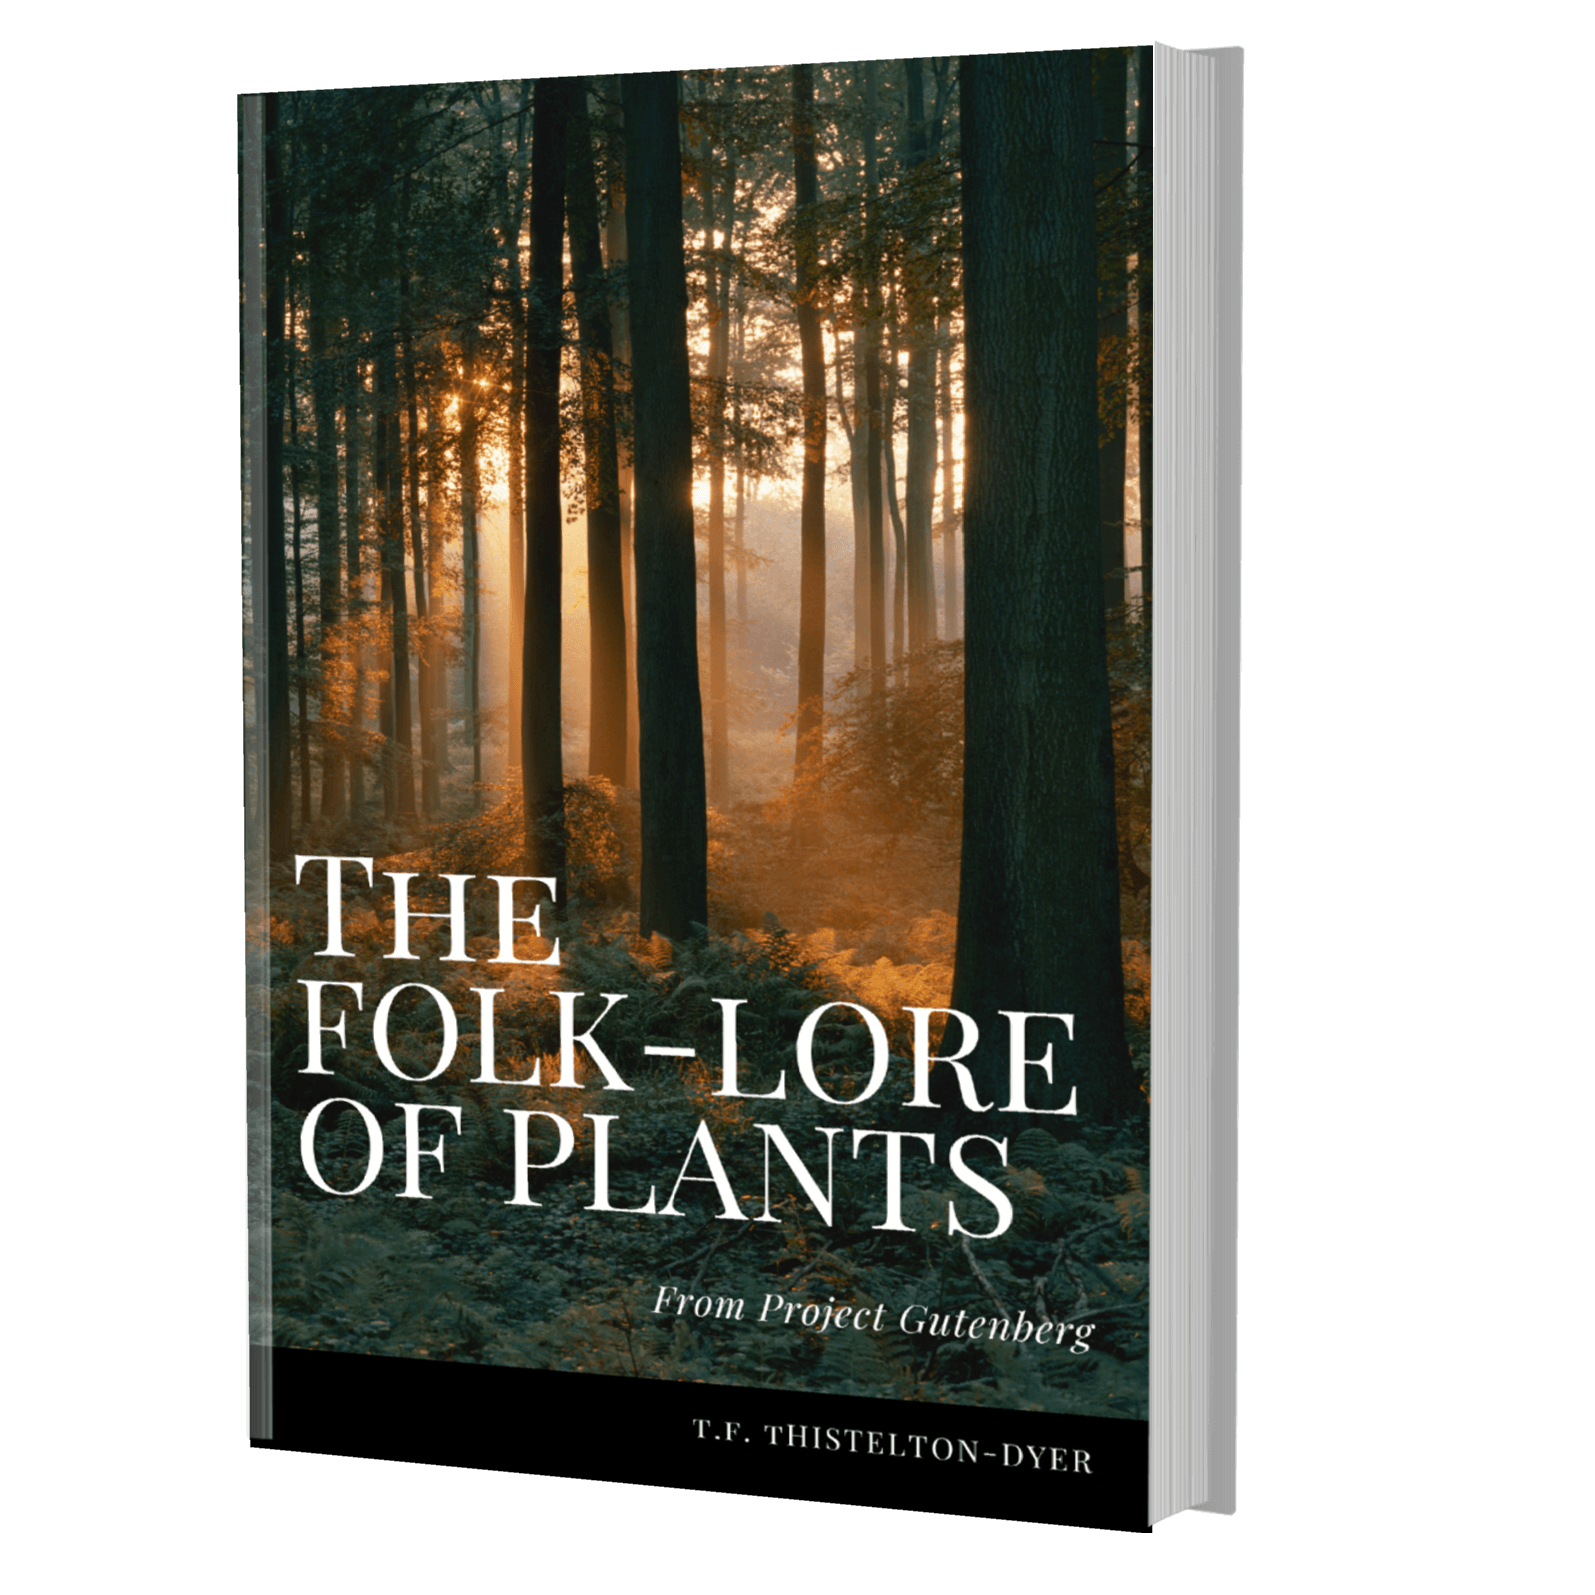 The Folk-lore of plants softback book